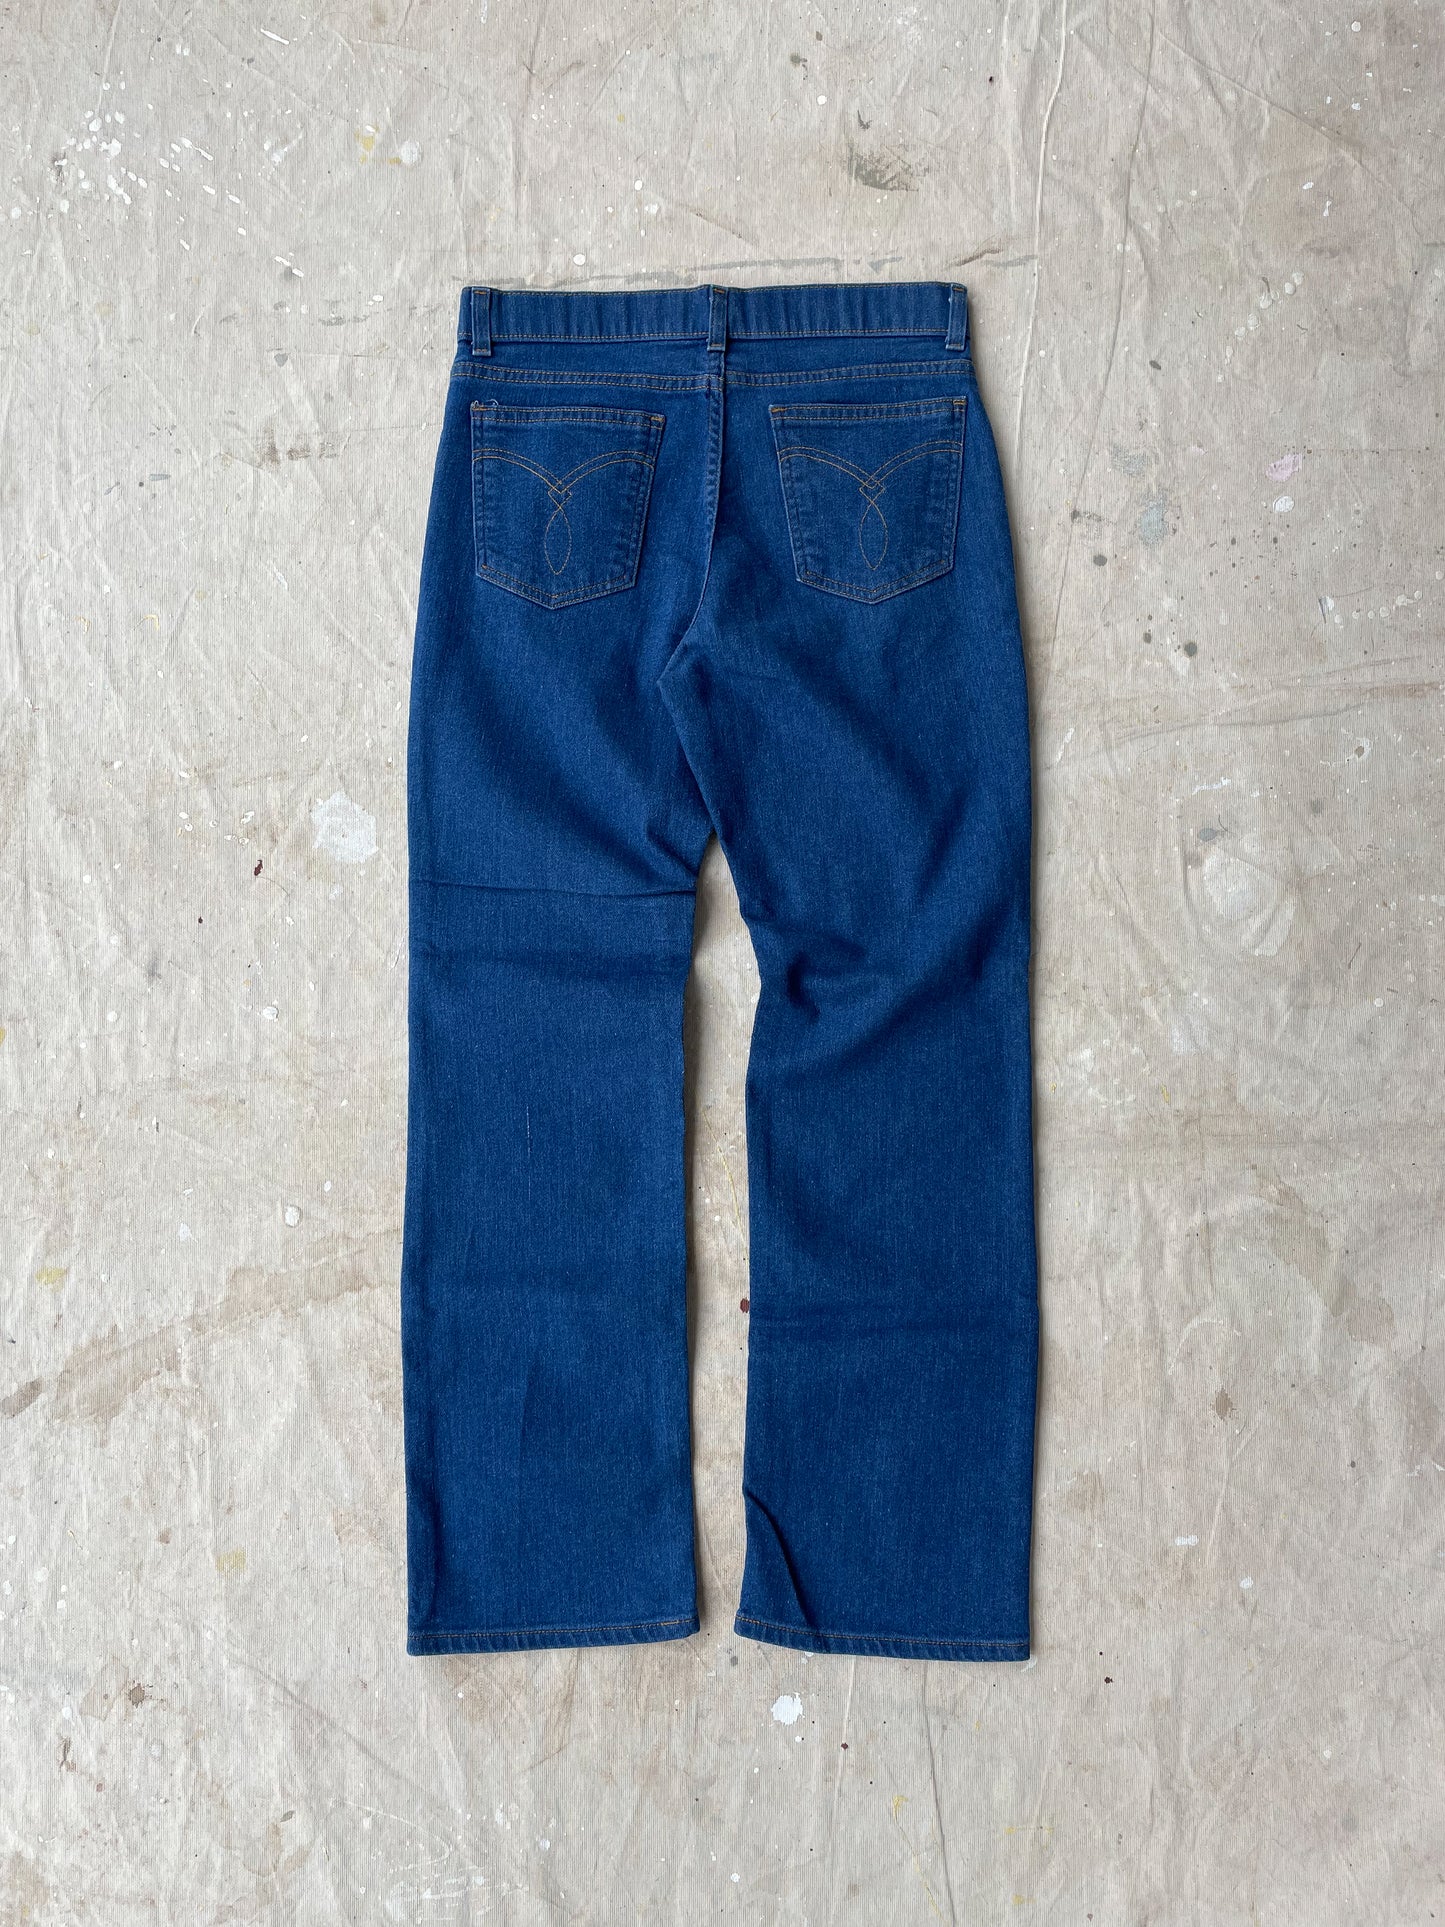 80's Levi's 514 Jeans—[30x30]